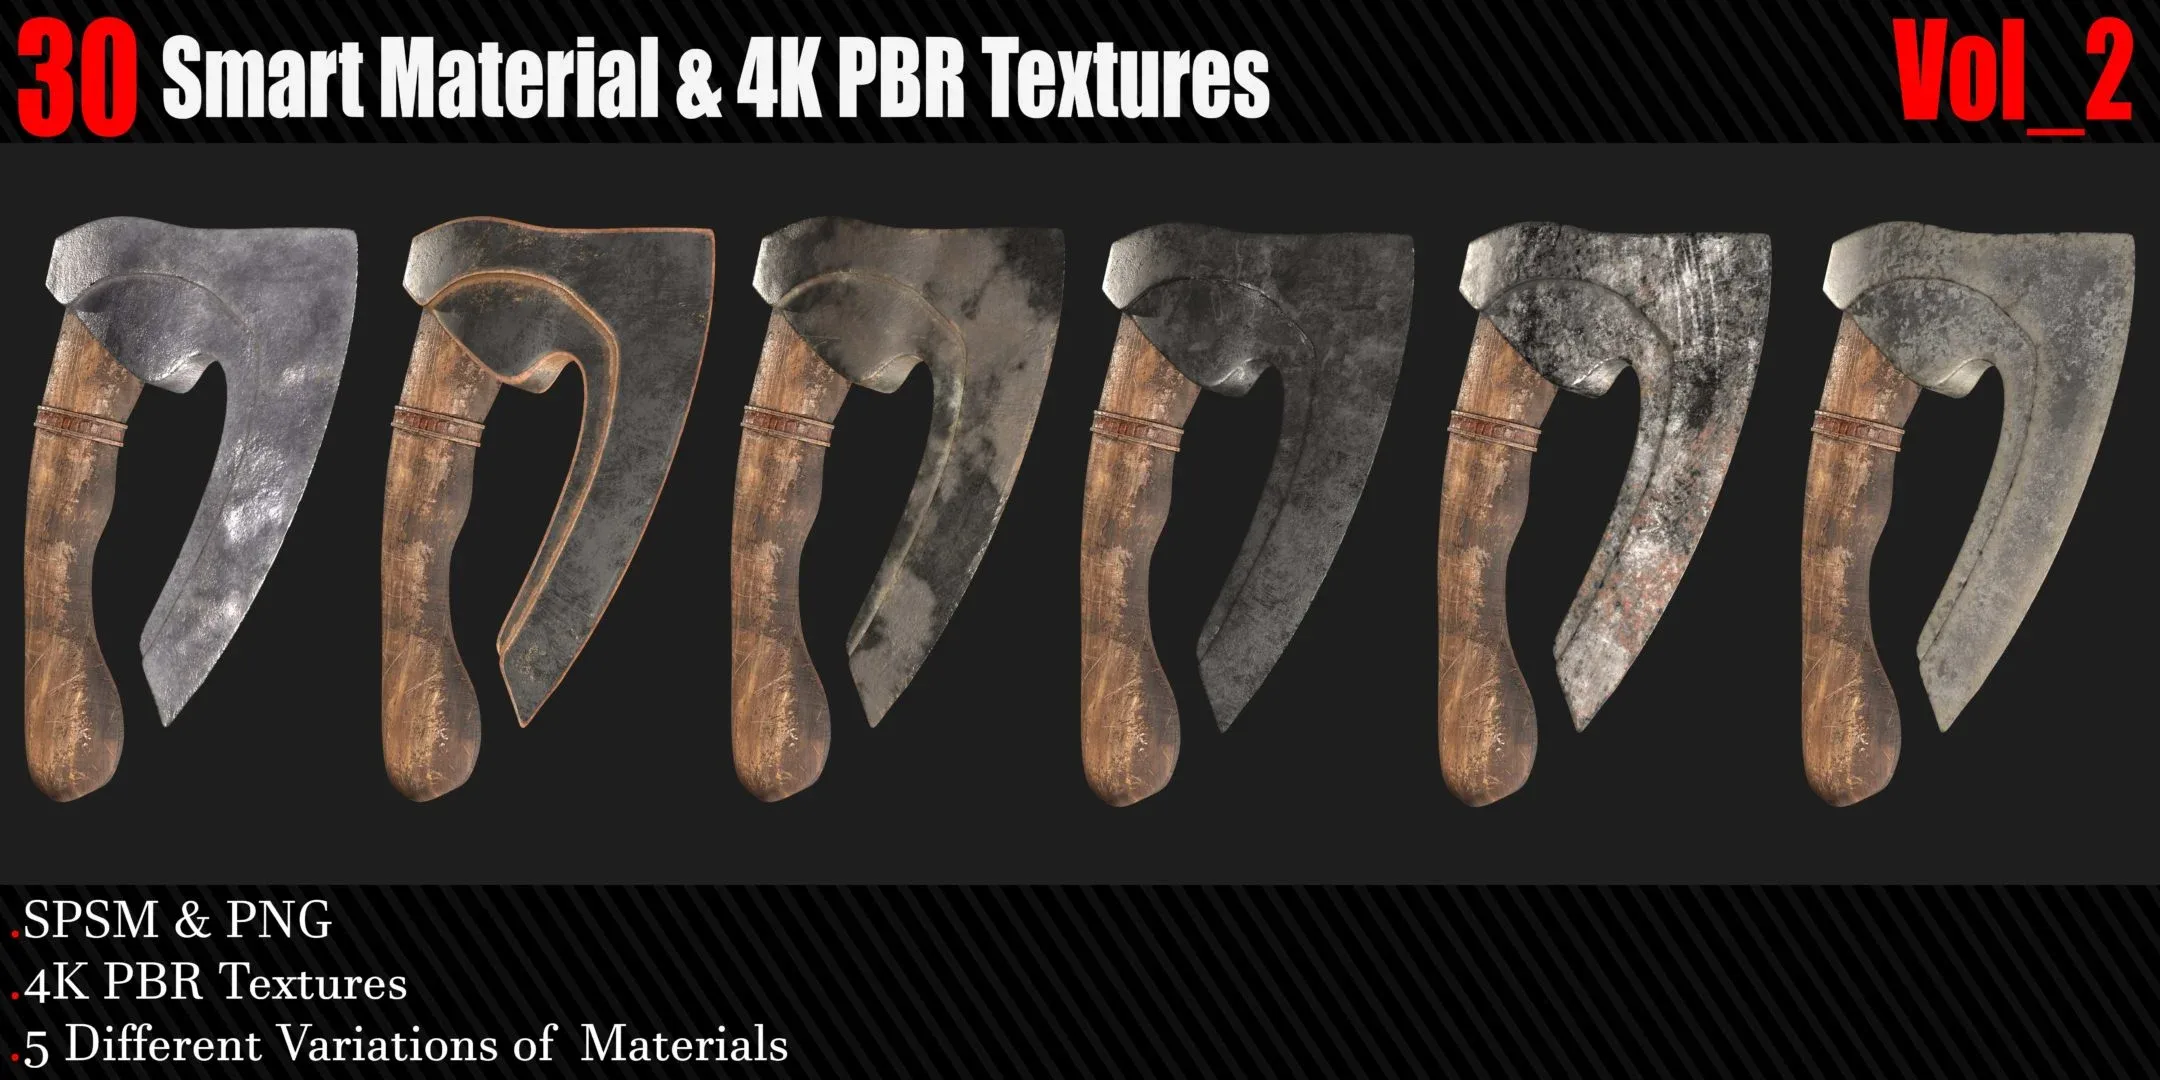 30 High Quality and Procedural Smart Materials + 4K PBR Texture Vol 2